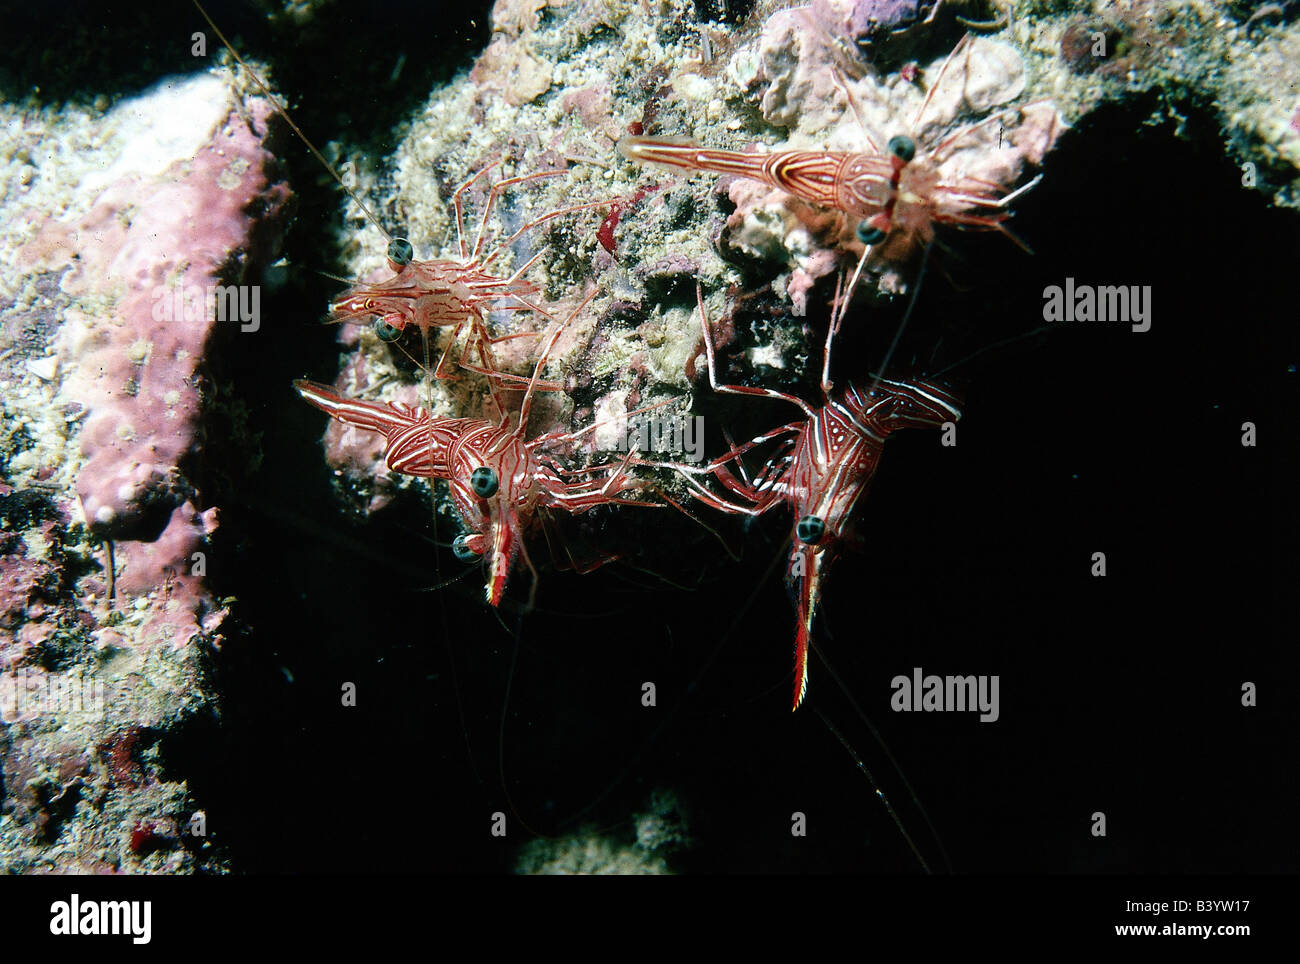 zoology / animals, shellfish / crustacean, Dancing Shrimp, (Rhynchocinetes durbanensis), several shrimps, on rock, underwater, d Stock Photo